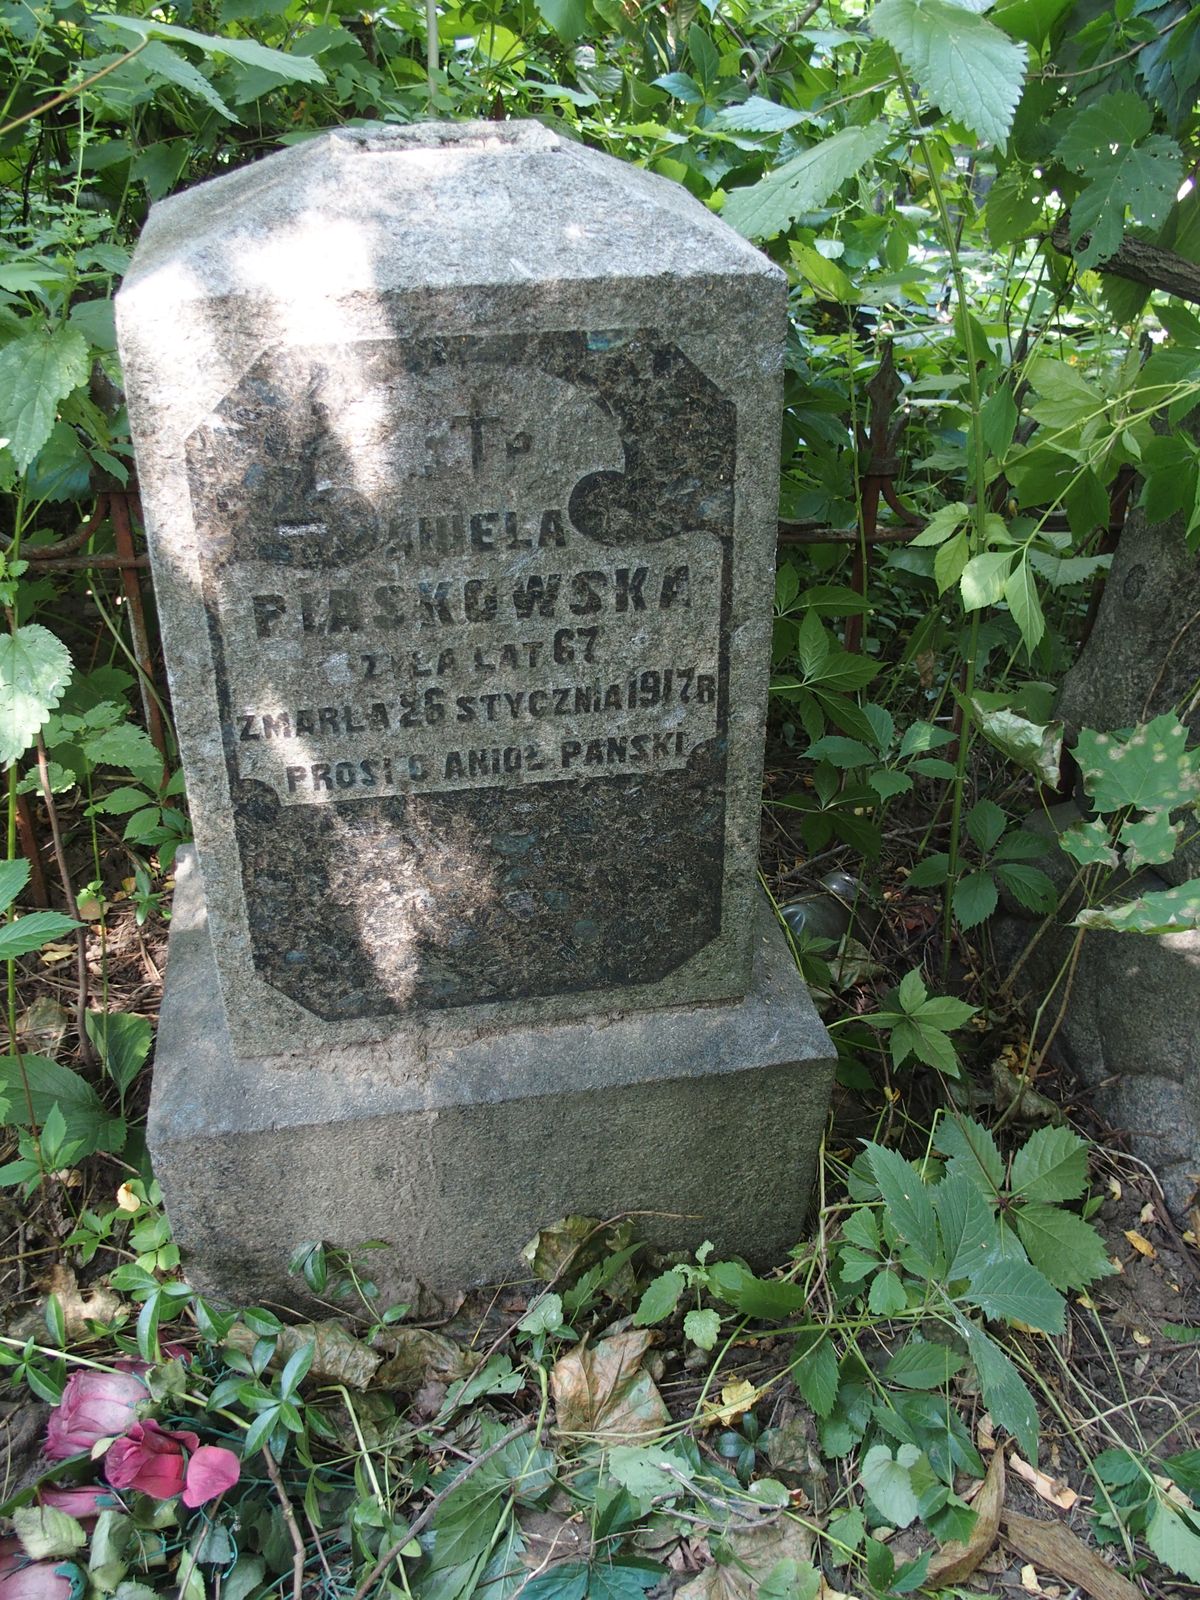 Tombstone of Aniela Piaskowska